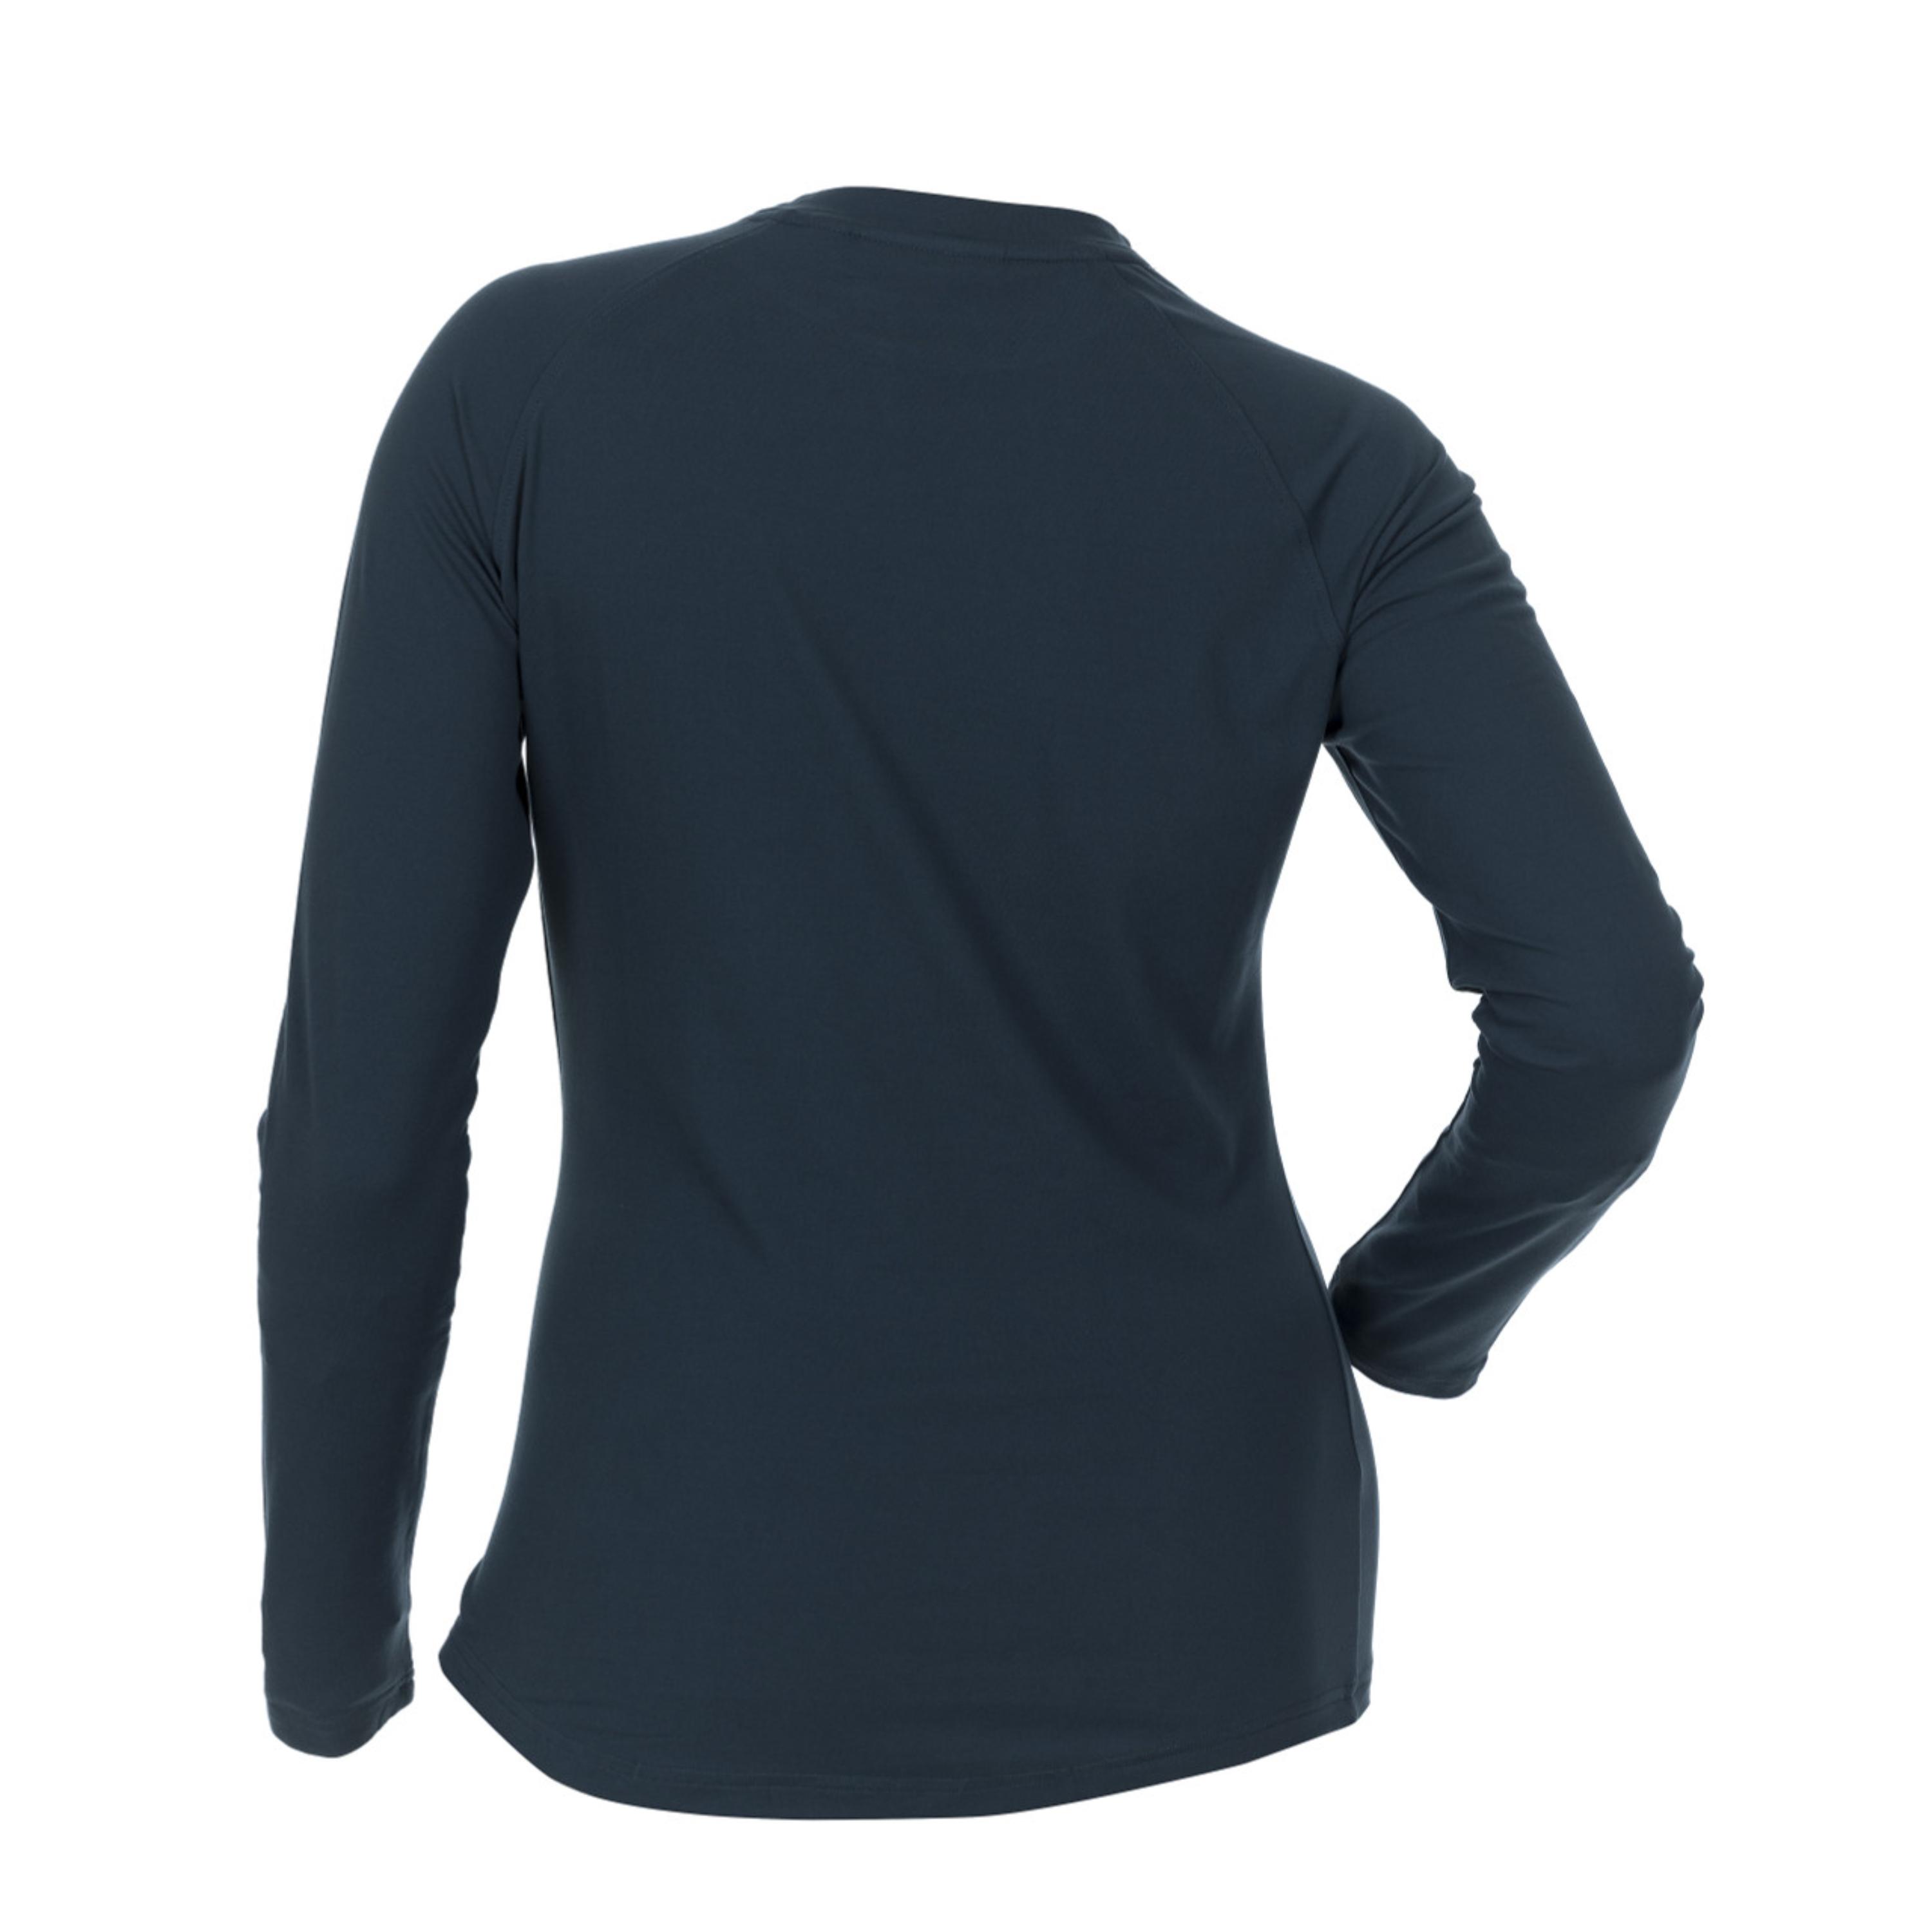 DSG Outerwear Solid Shirt, UPF 50+ in Glacier, Size: Medium